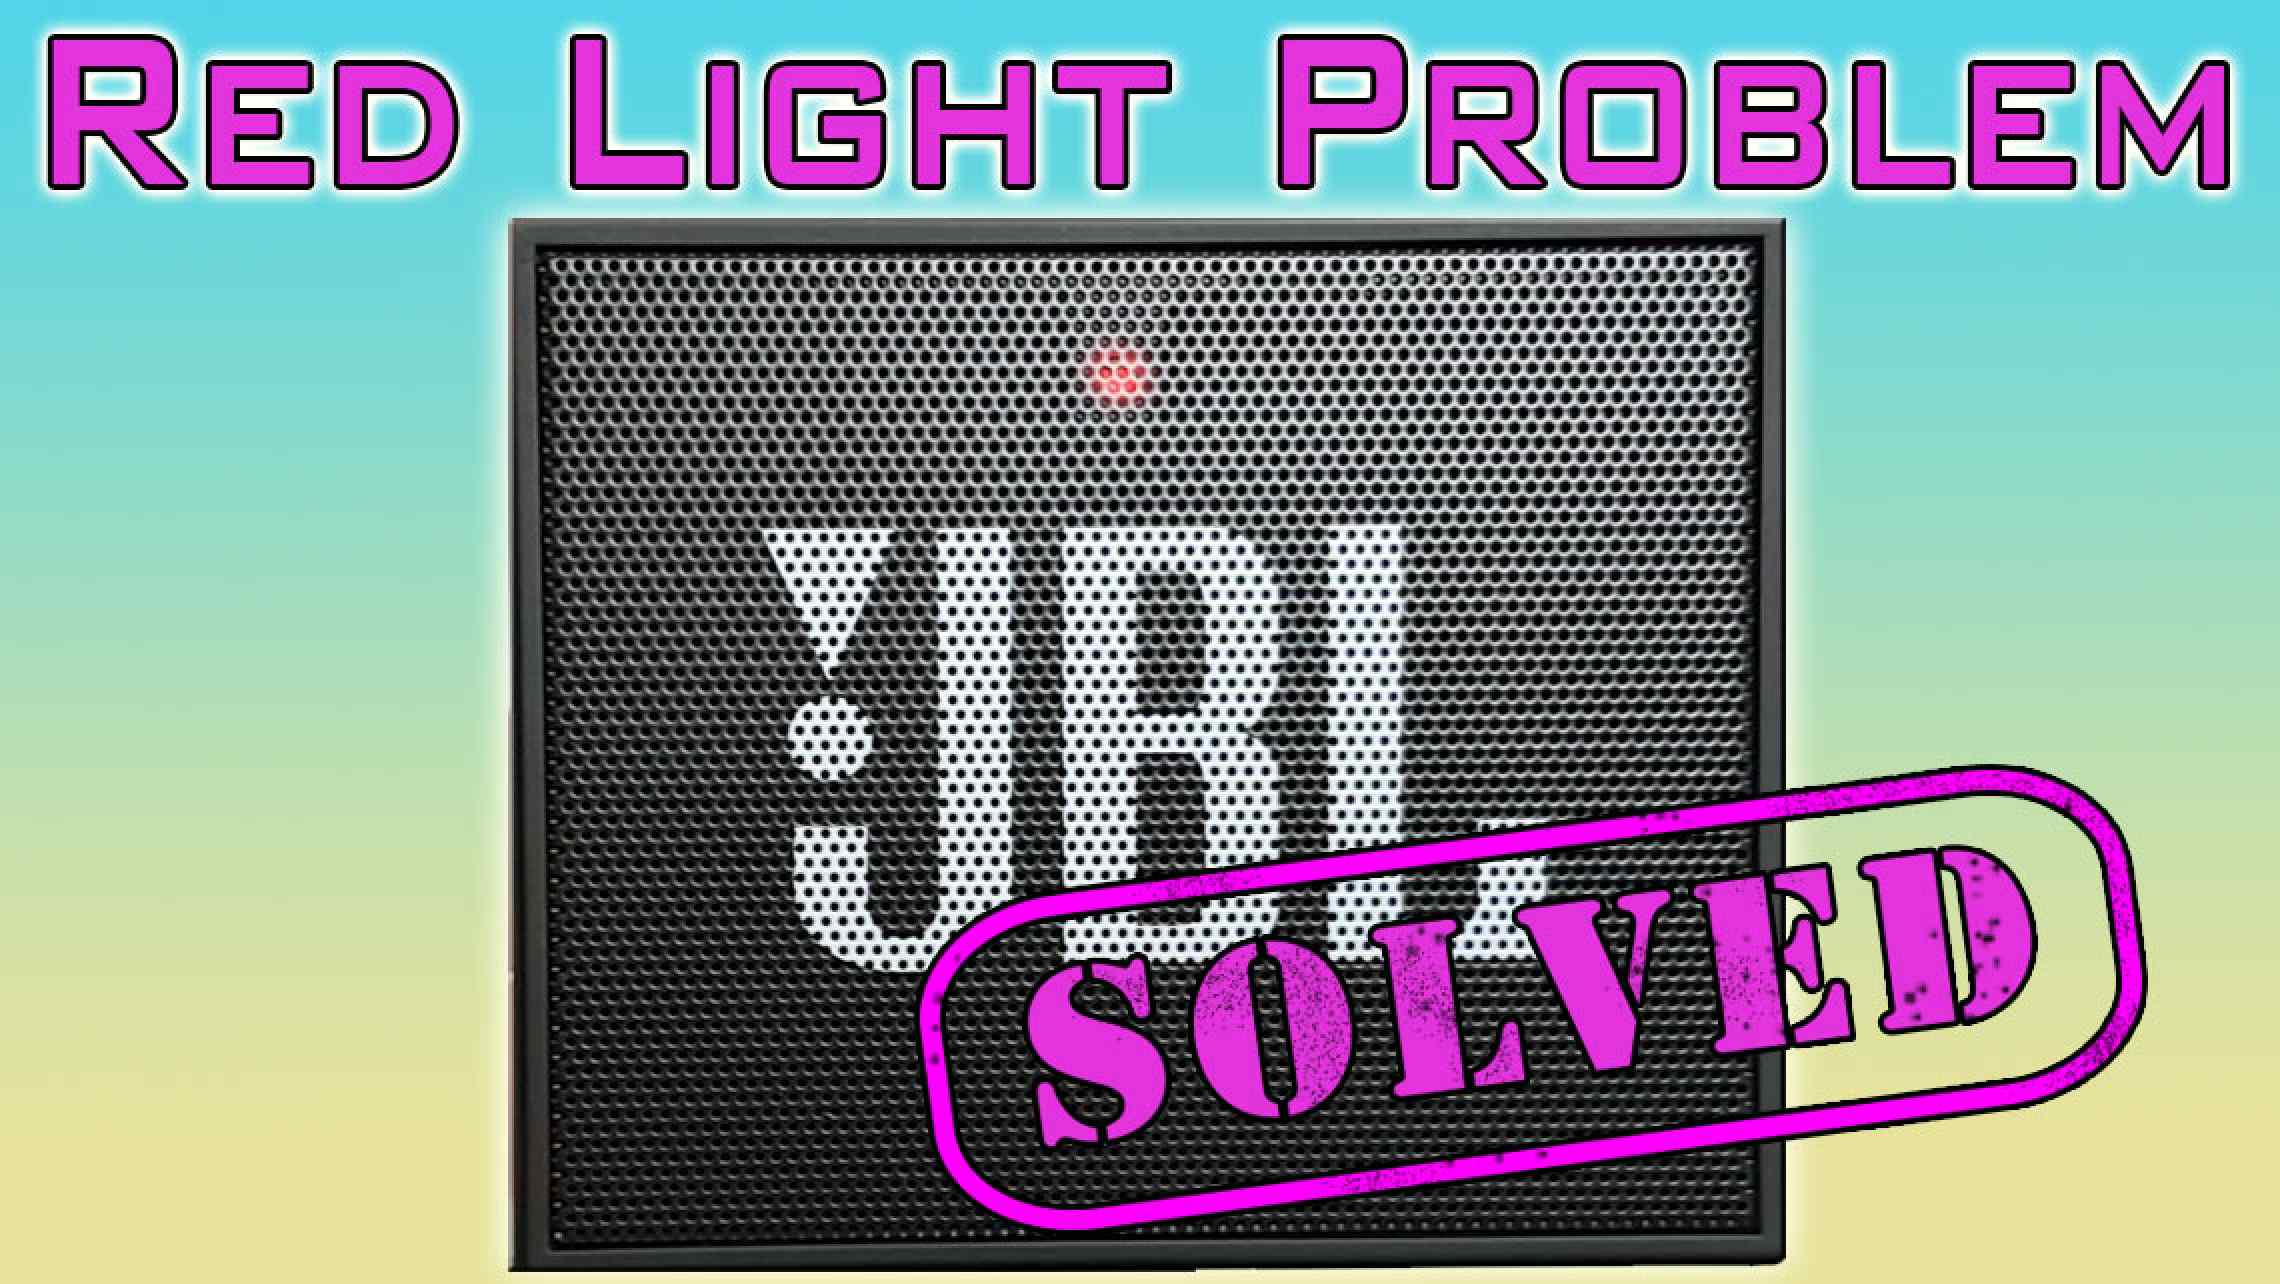 JBL Go Red Light Problem - How to solve 